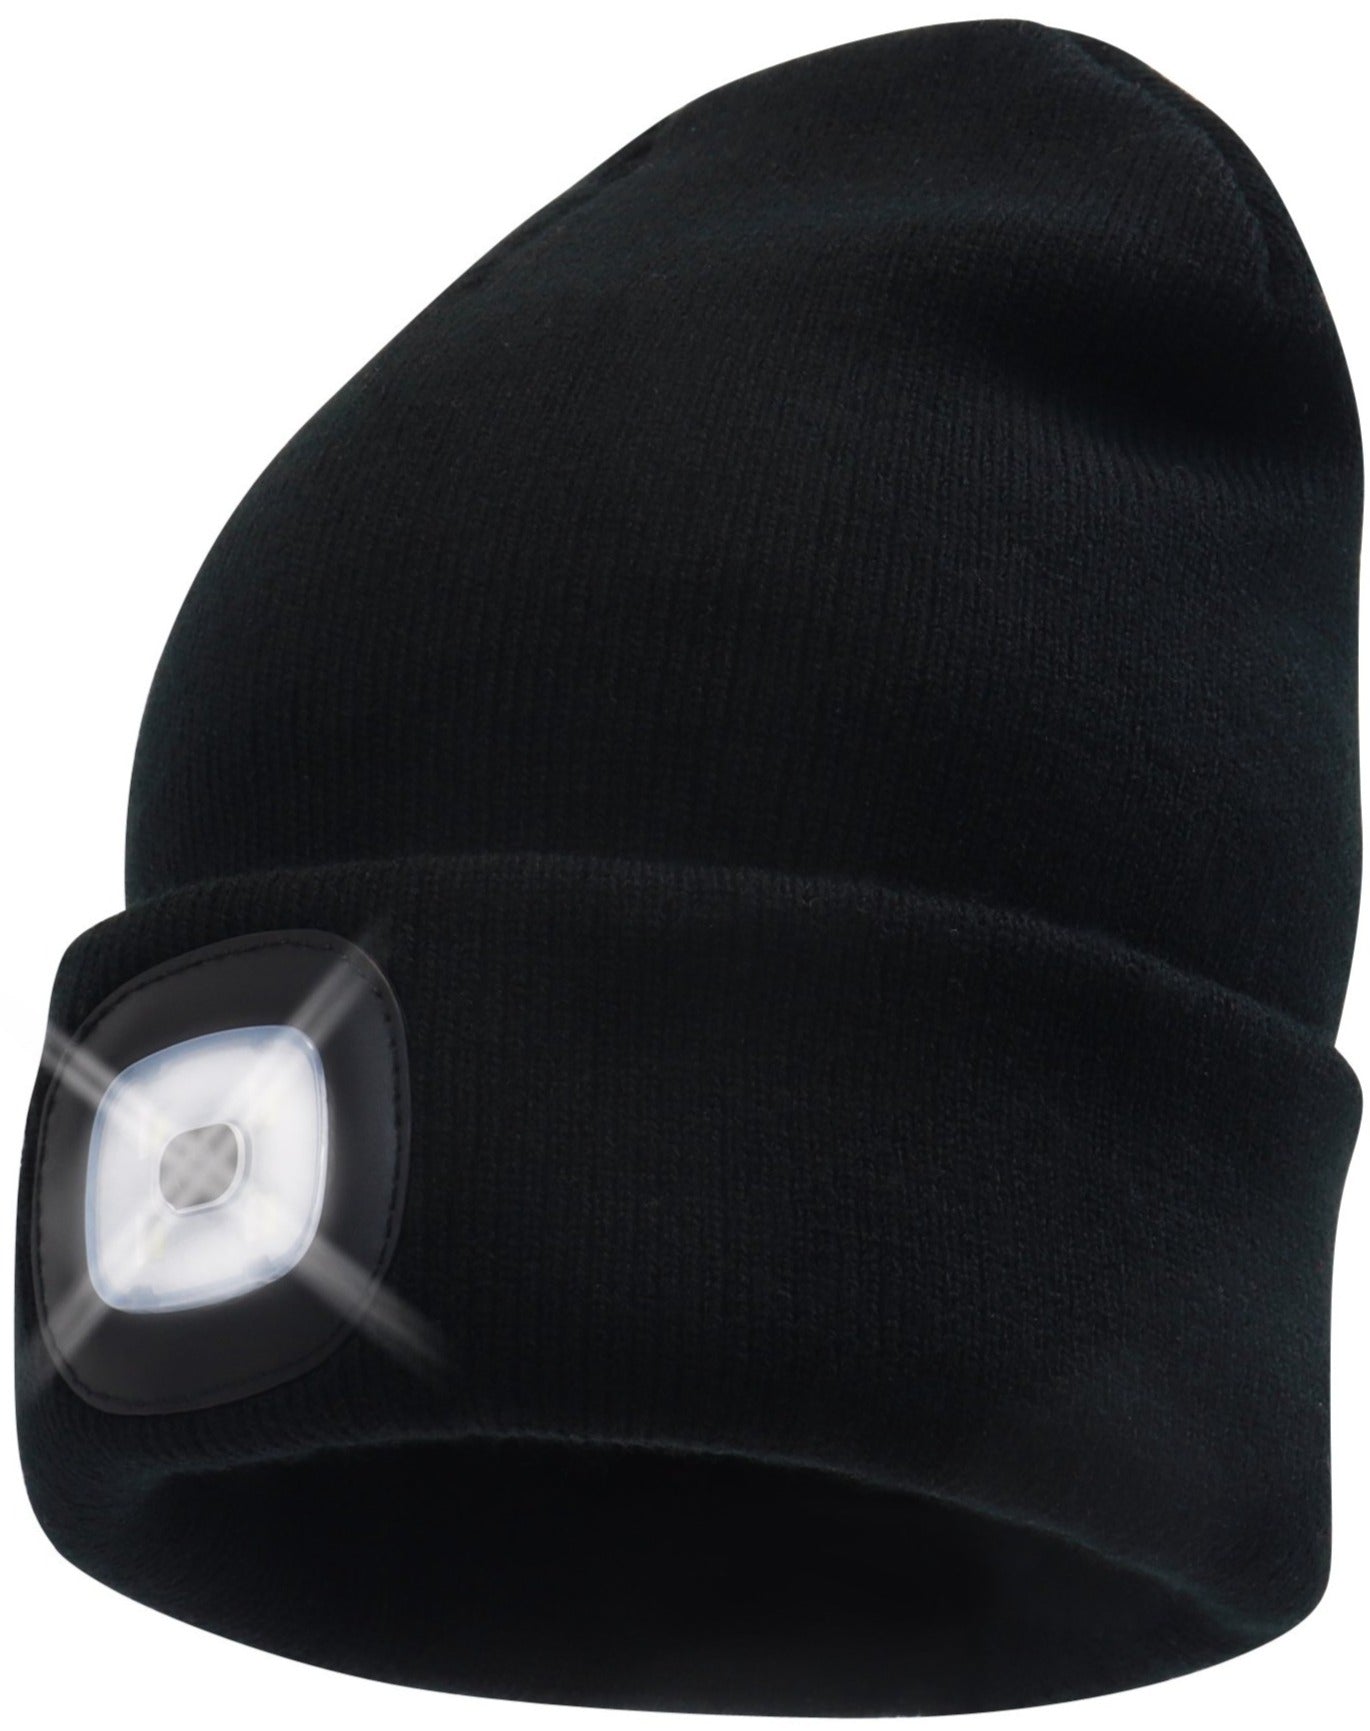 Headlightz® Beanie - Knit - Black – Innovation